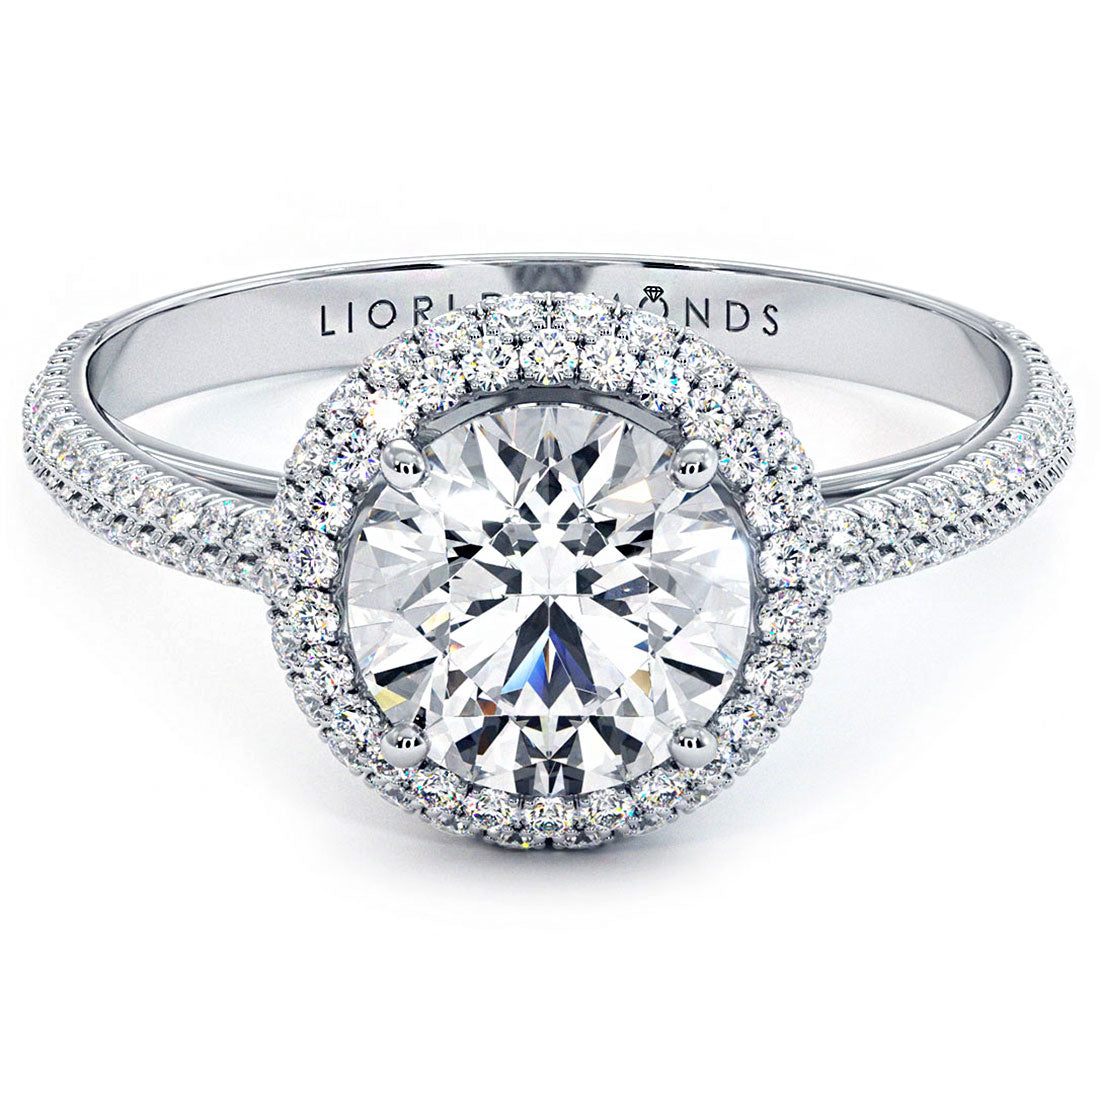 1.62 Carat H-SI1 Certified Natural Round Diamond Engagement Ring Set in Platinum